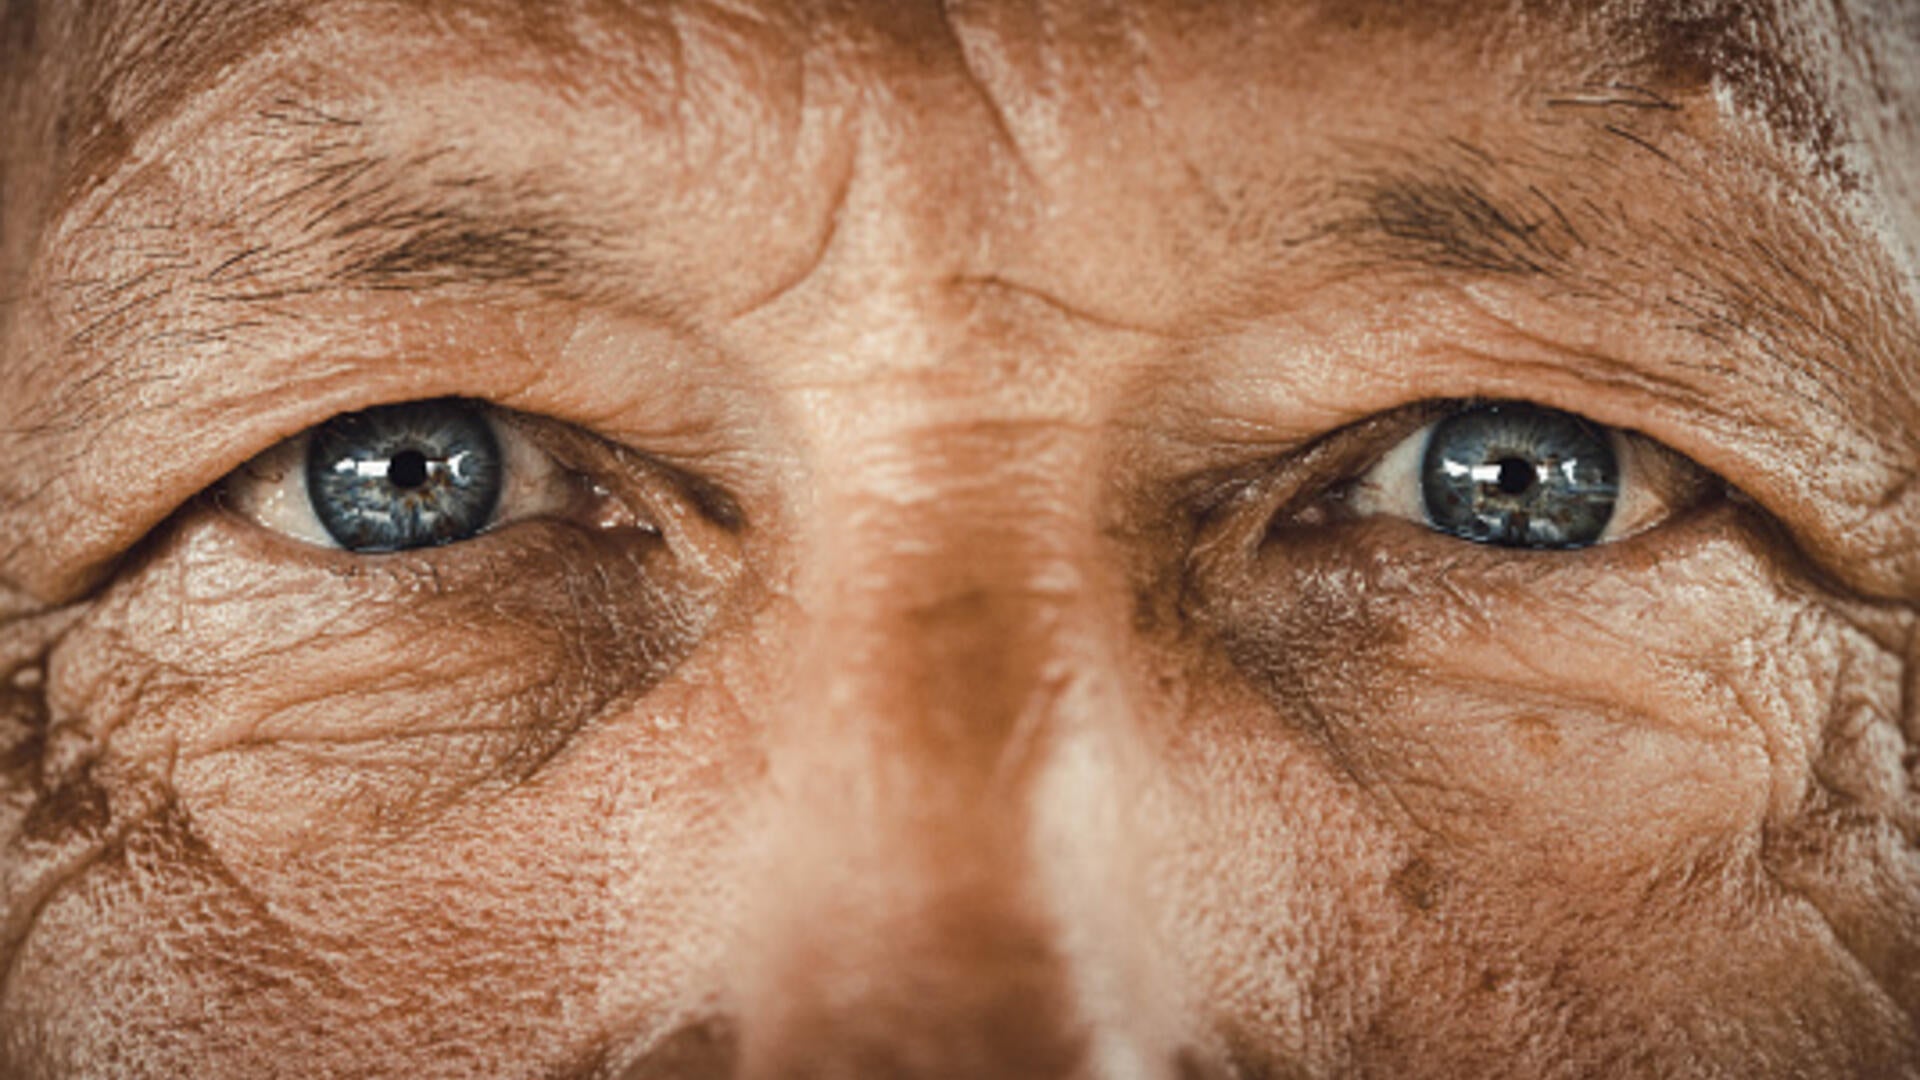 Stock image of a elderly man's eyes